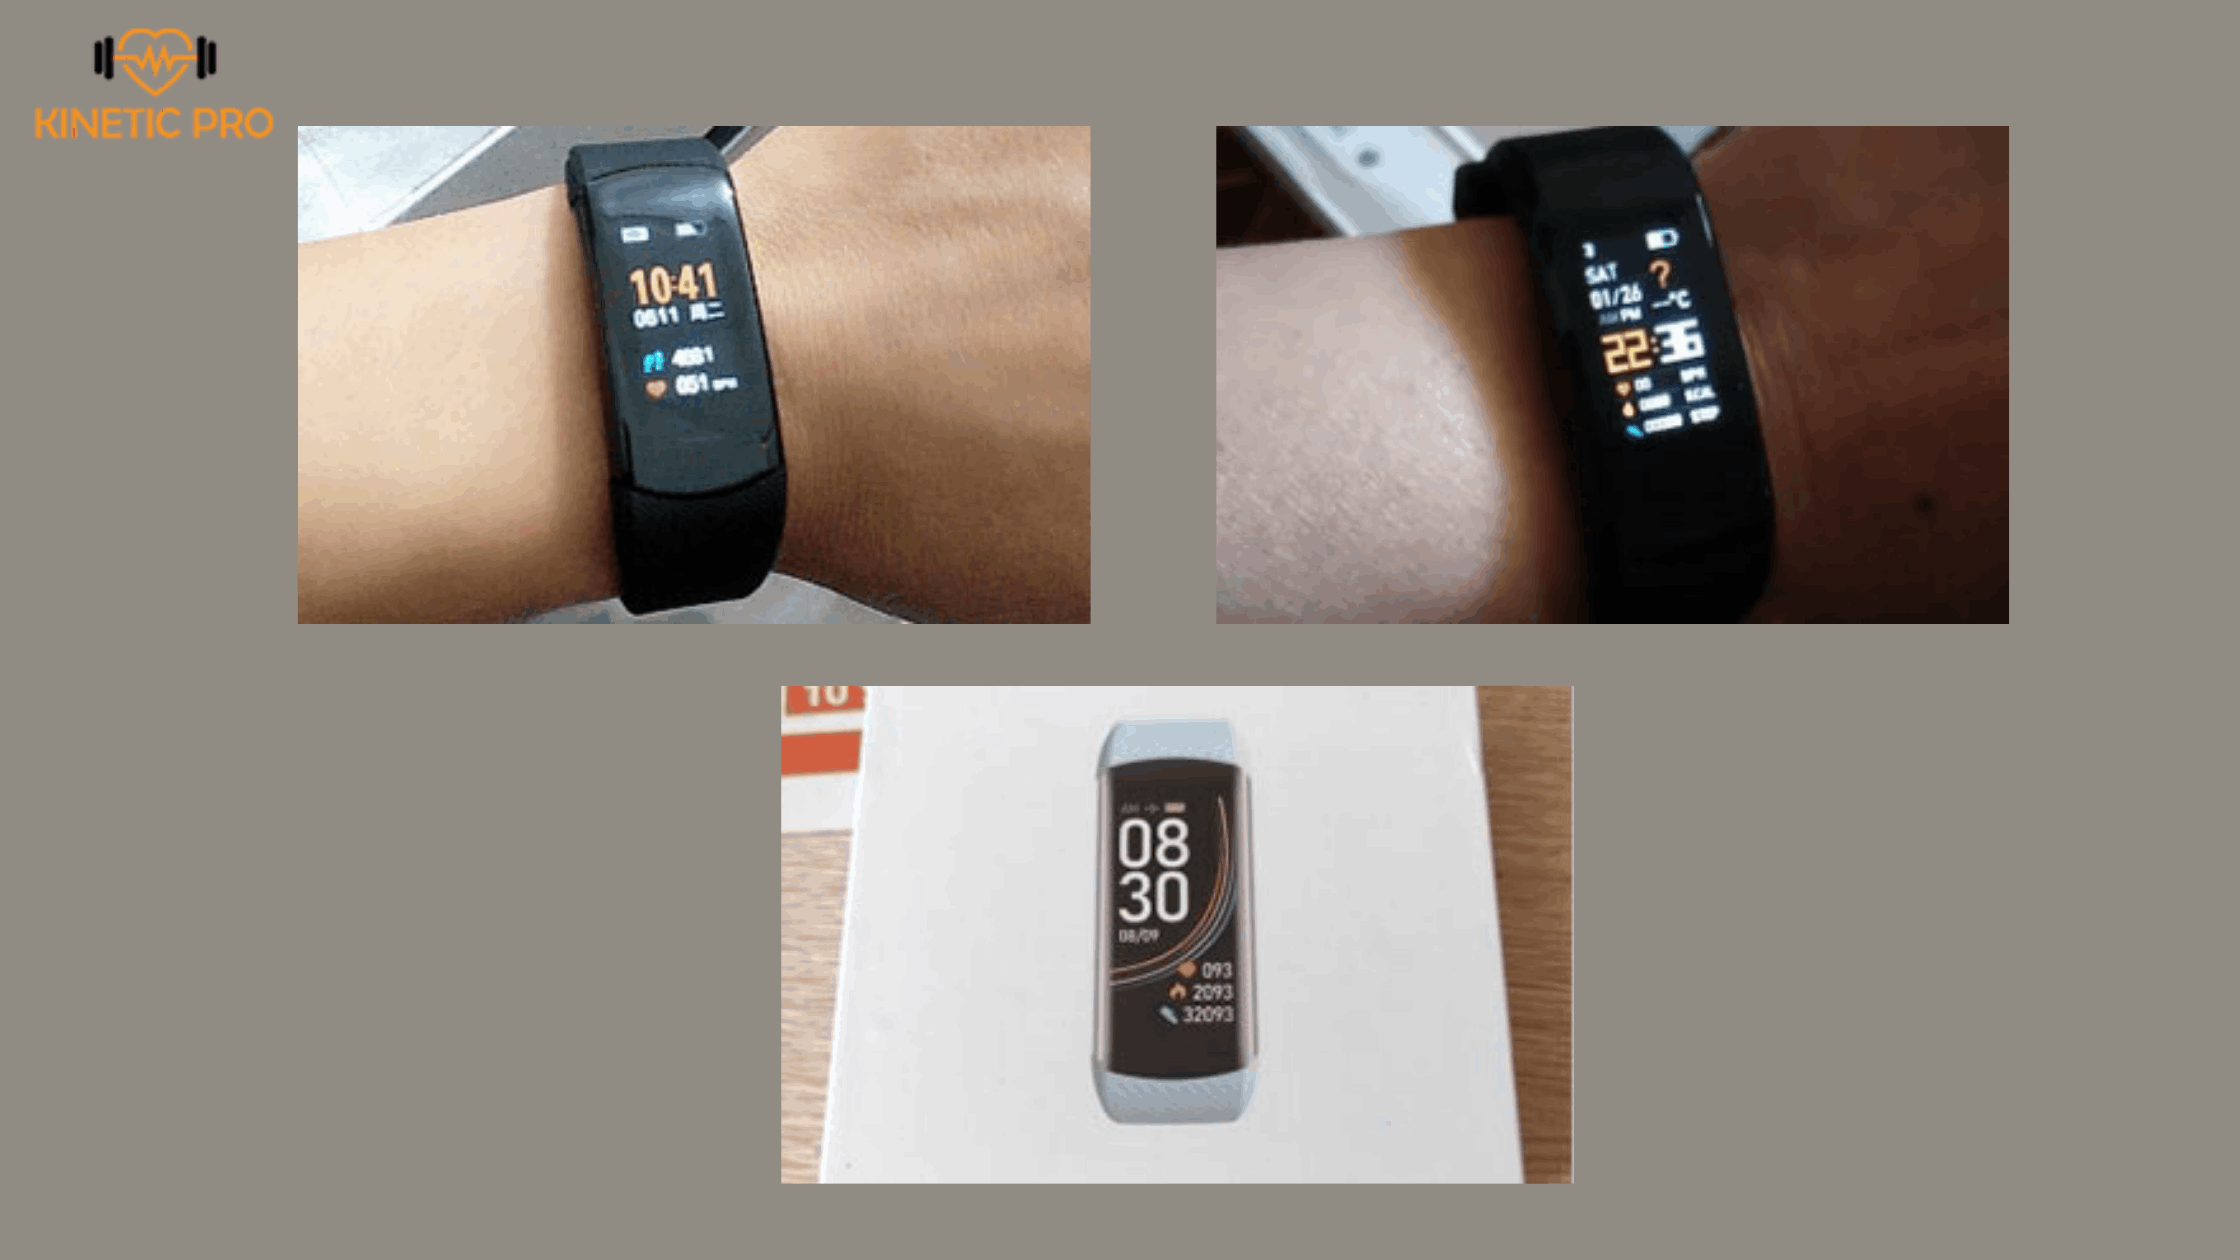 Kinetic Pro Smartwatch Benefits